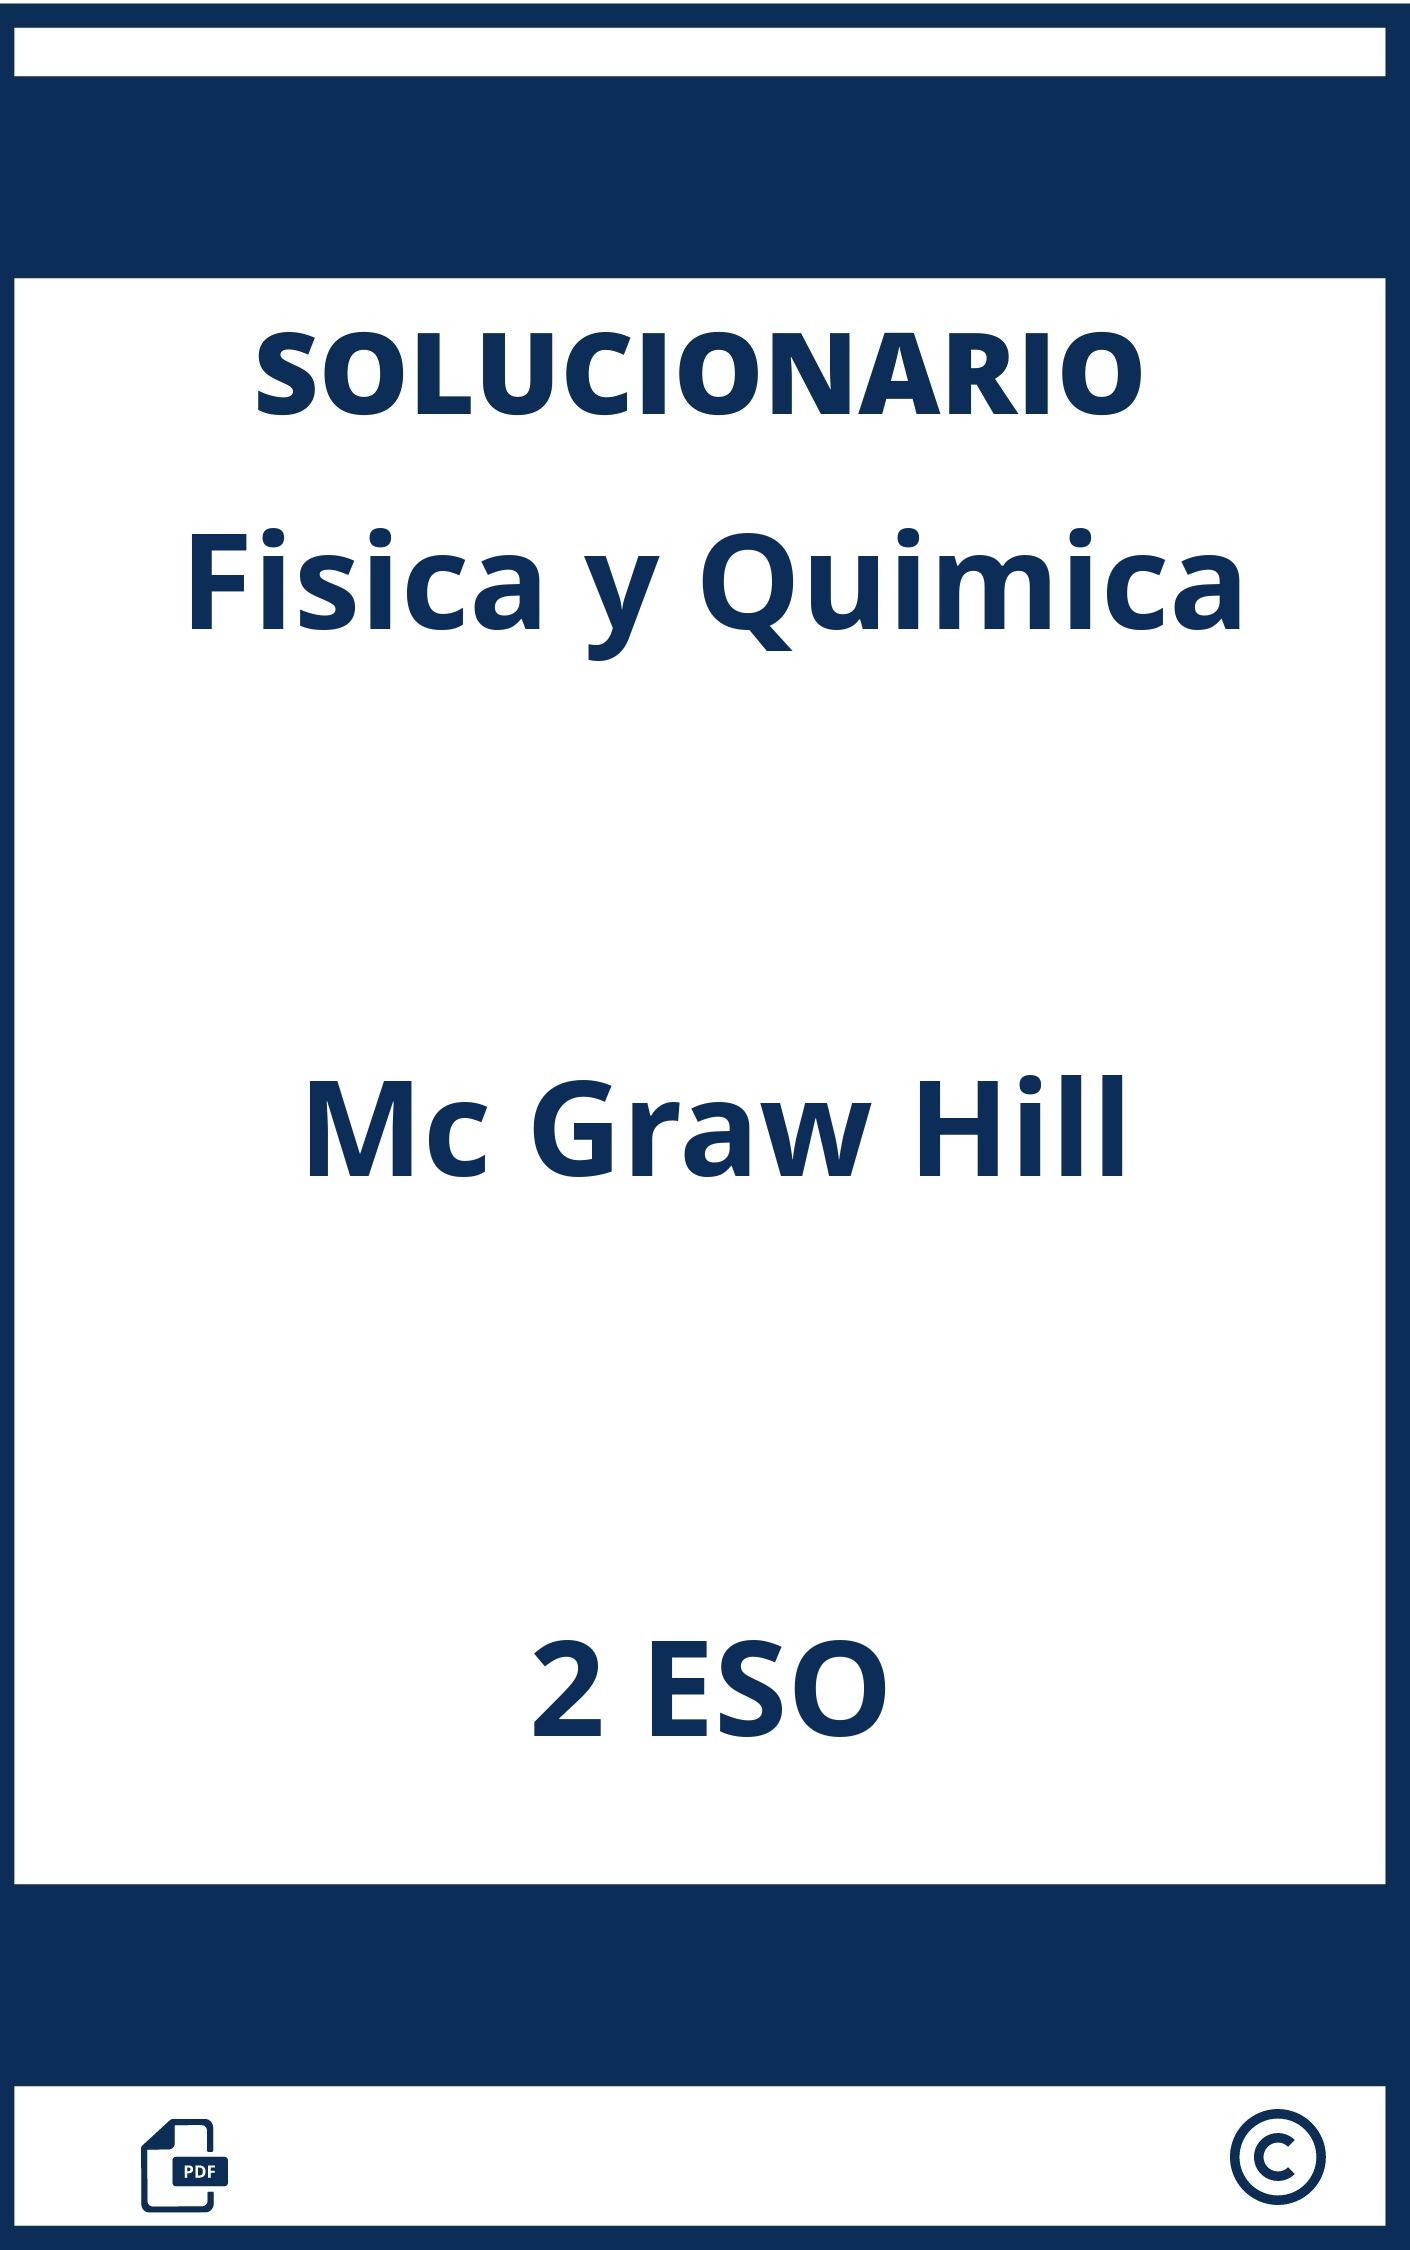 Solucionario Fisica Y Quimica 2 Eso Mc Graw Hill Pdf